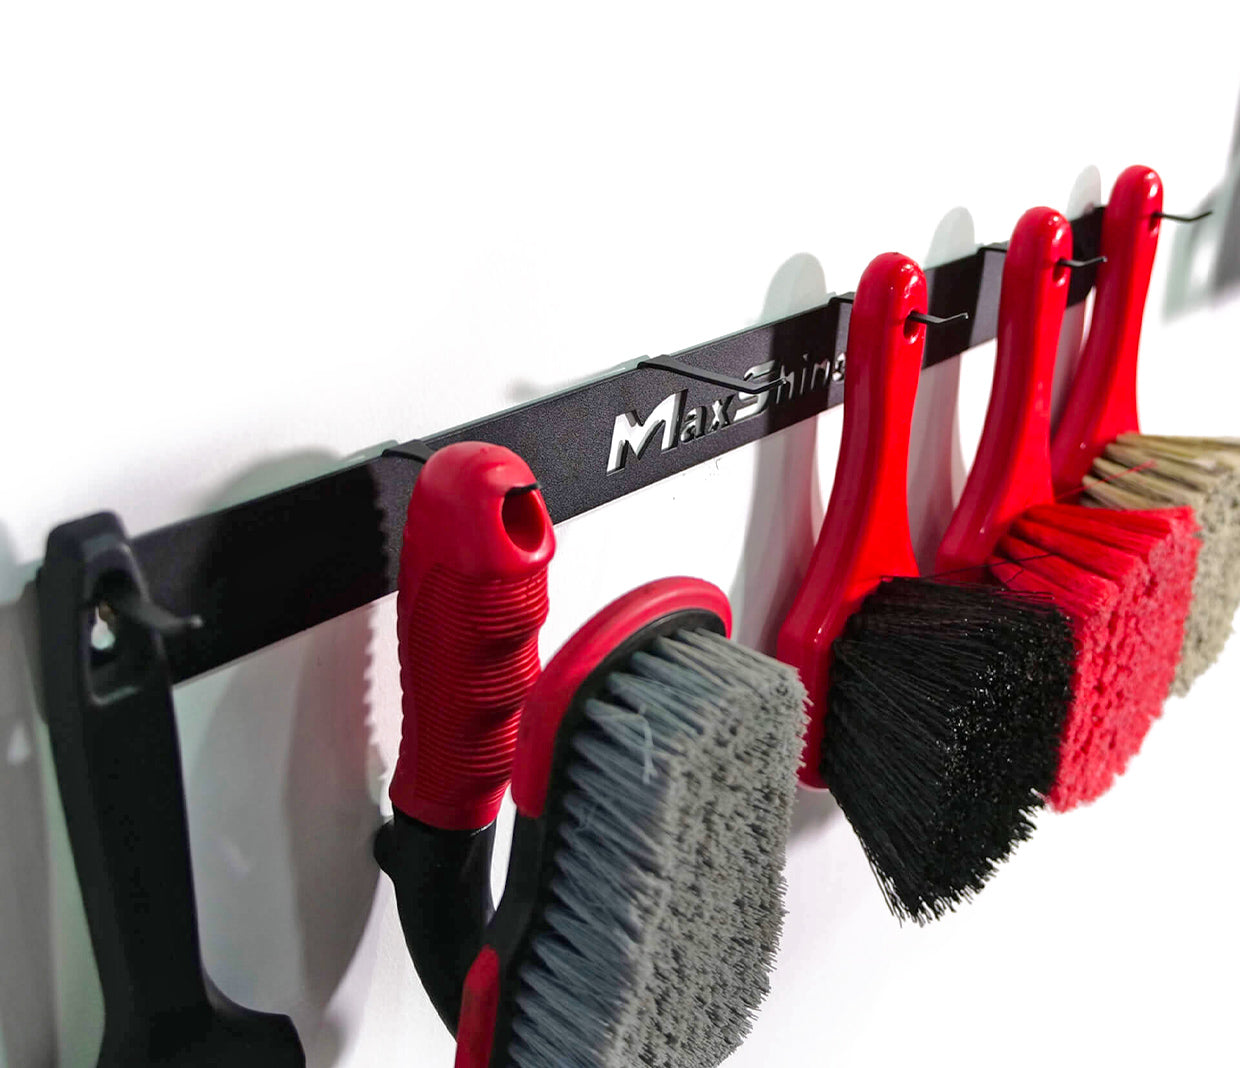 Maxshine Detailing Brush Hanger With Hooks